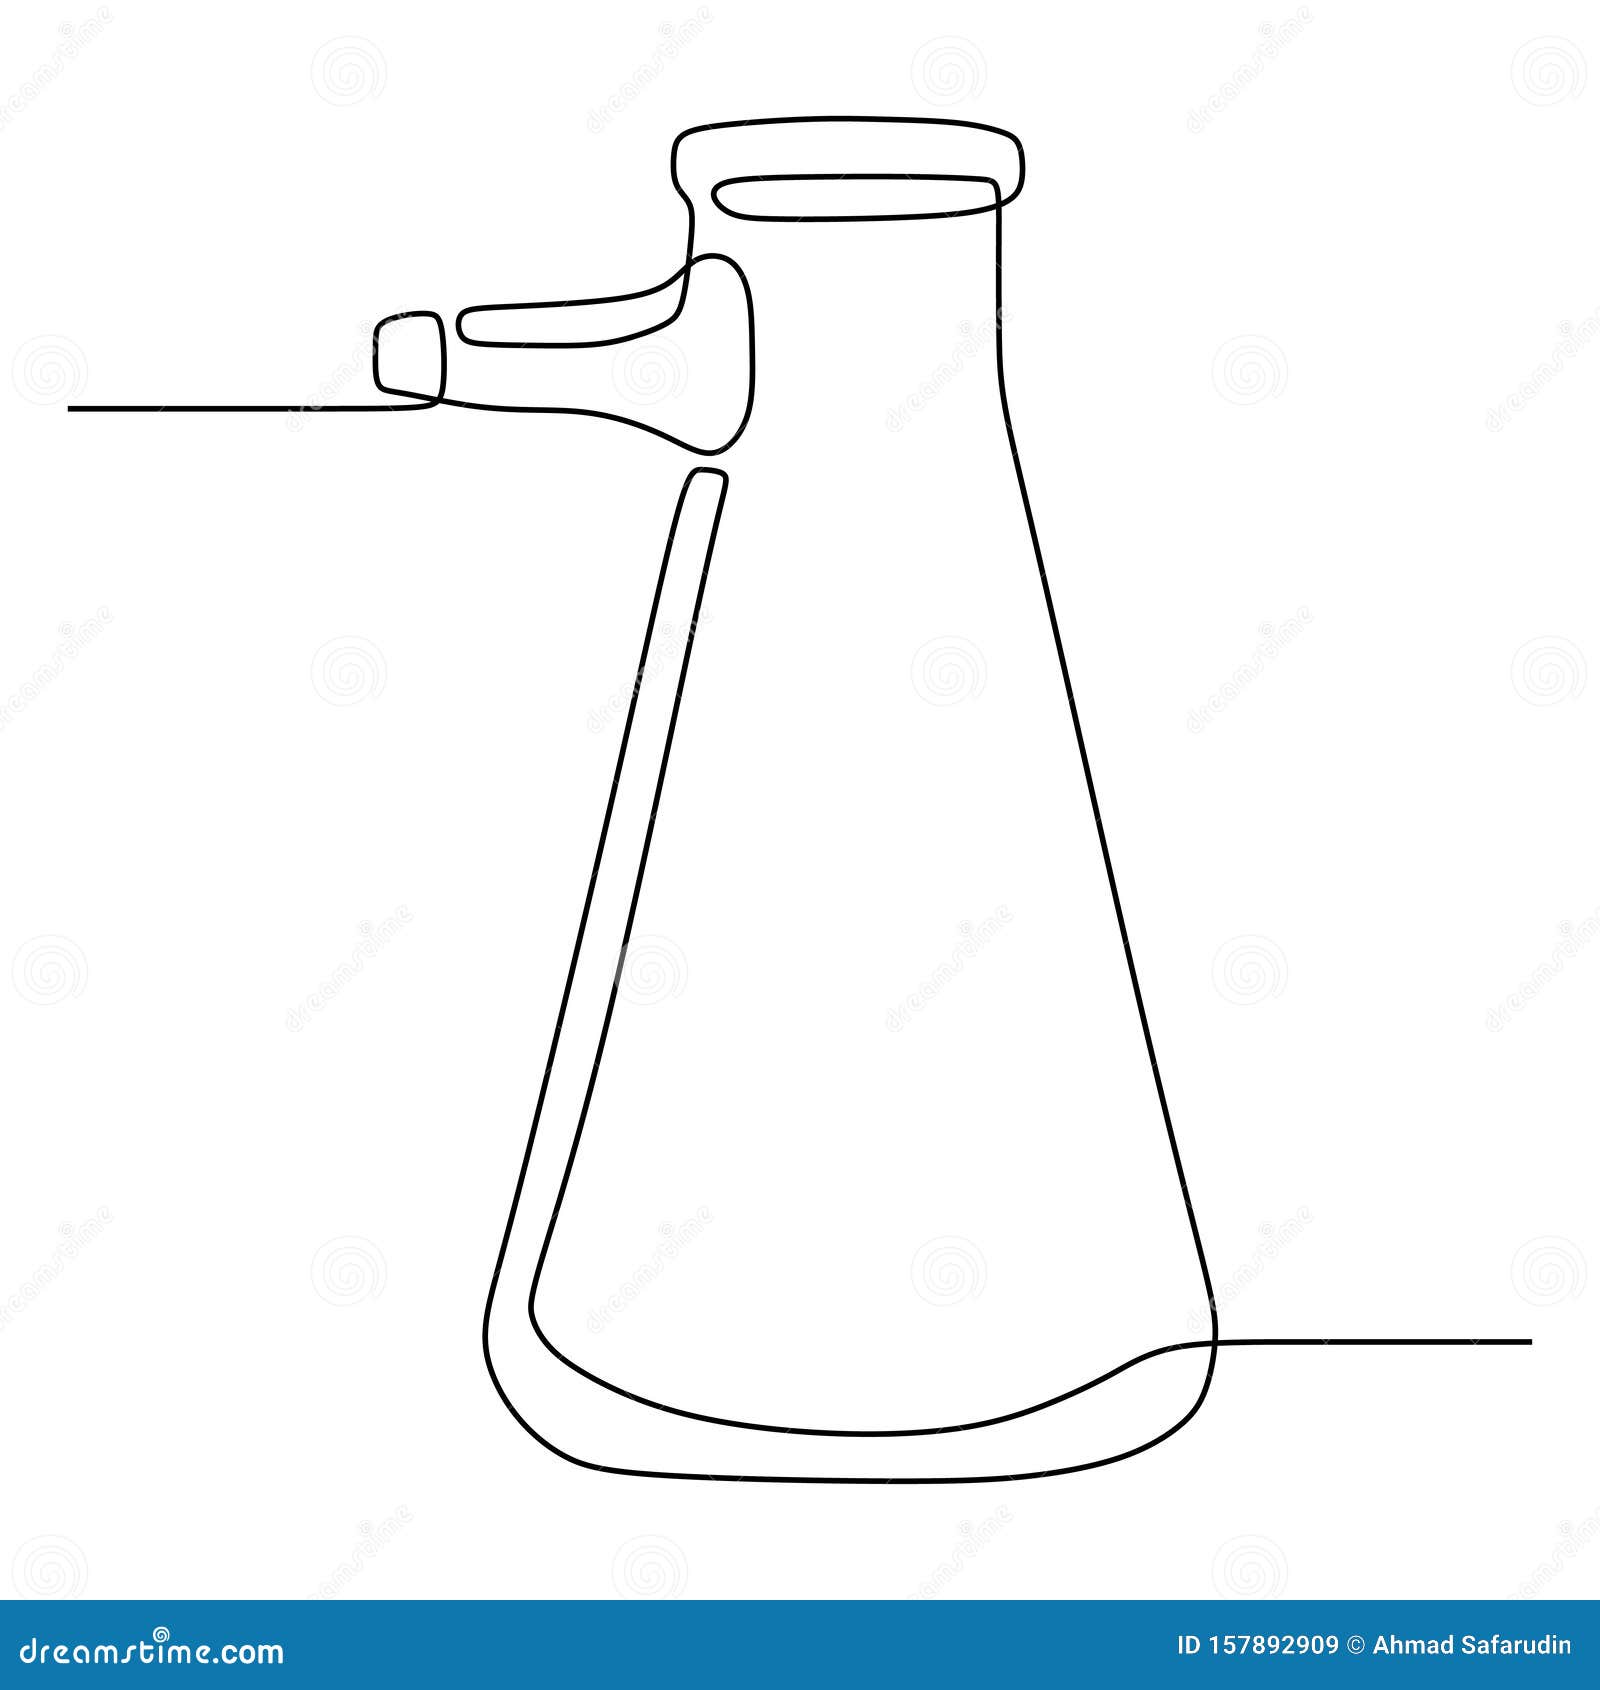 Laboratory equipment set (1) Line drawing - Stock Illustration [103711548]  - PIXTA